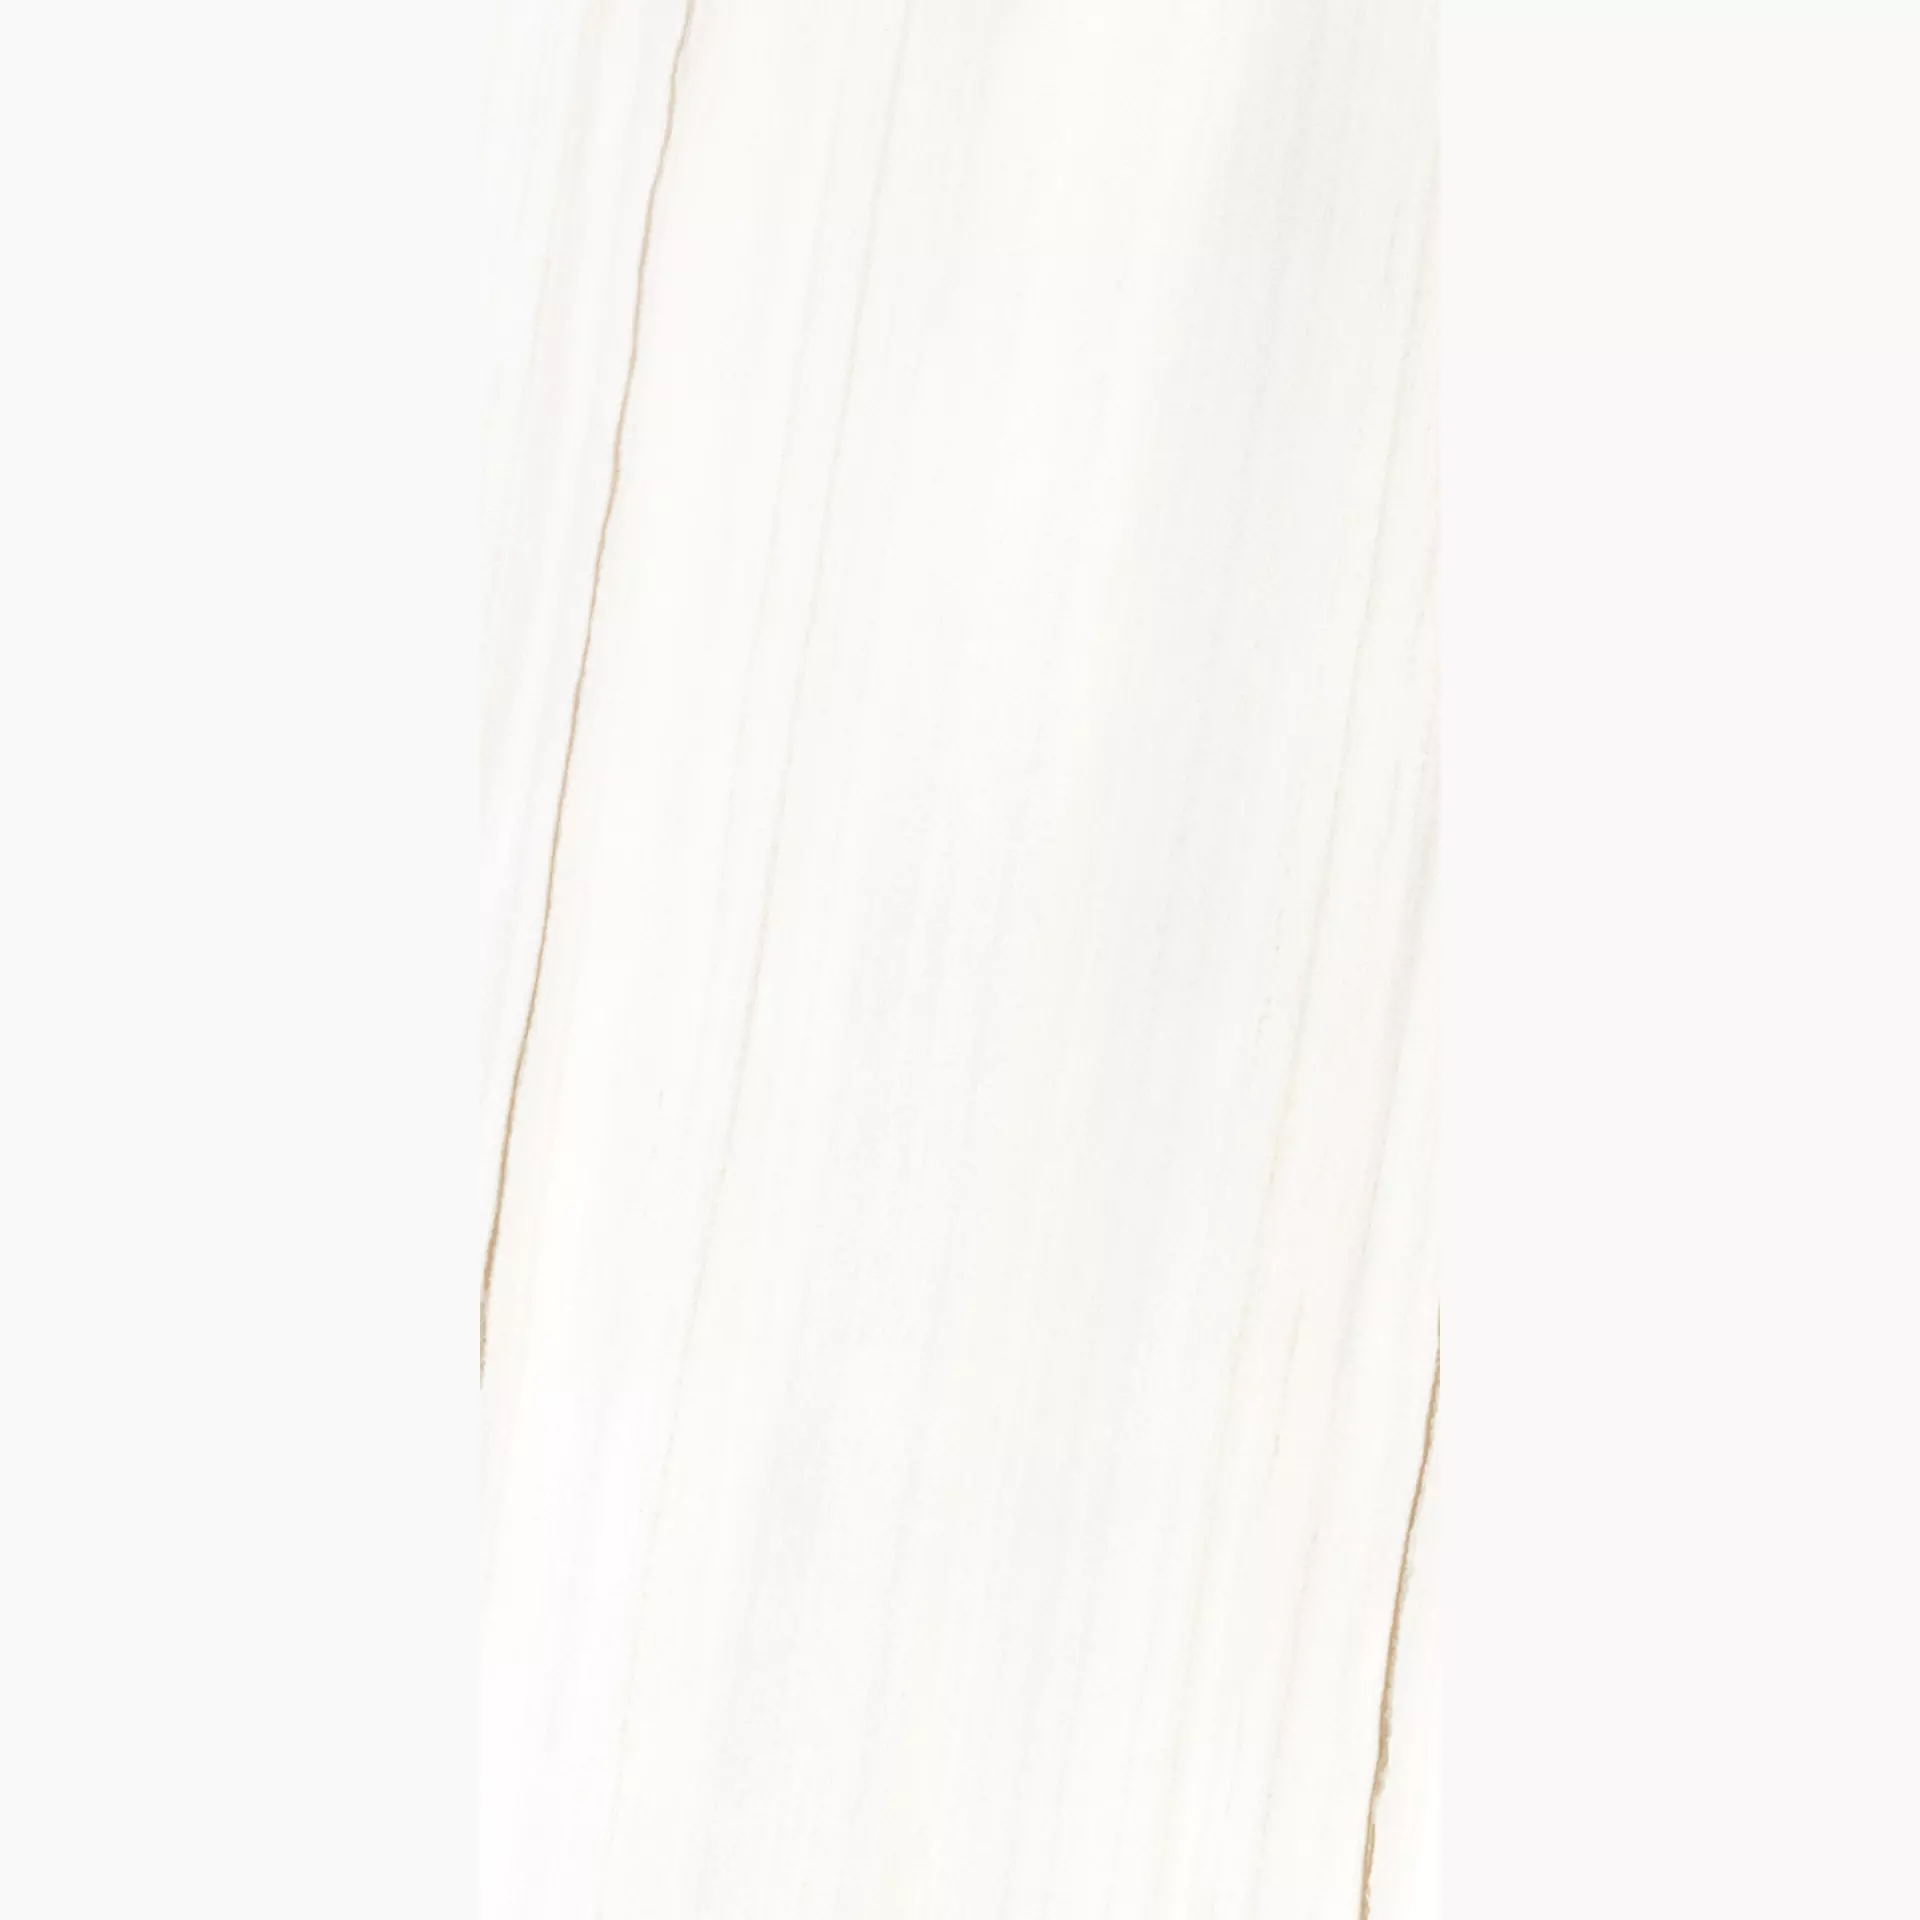 Rondine Canova Lasa White Lappato J88859 60x120cm rektifiziert 8,5mm